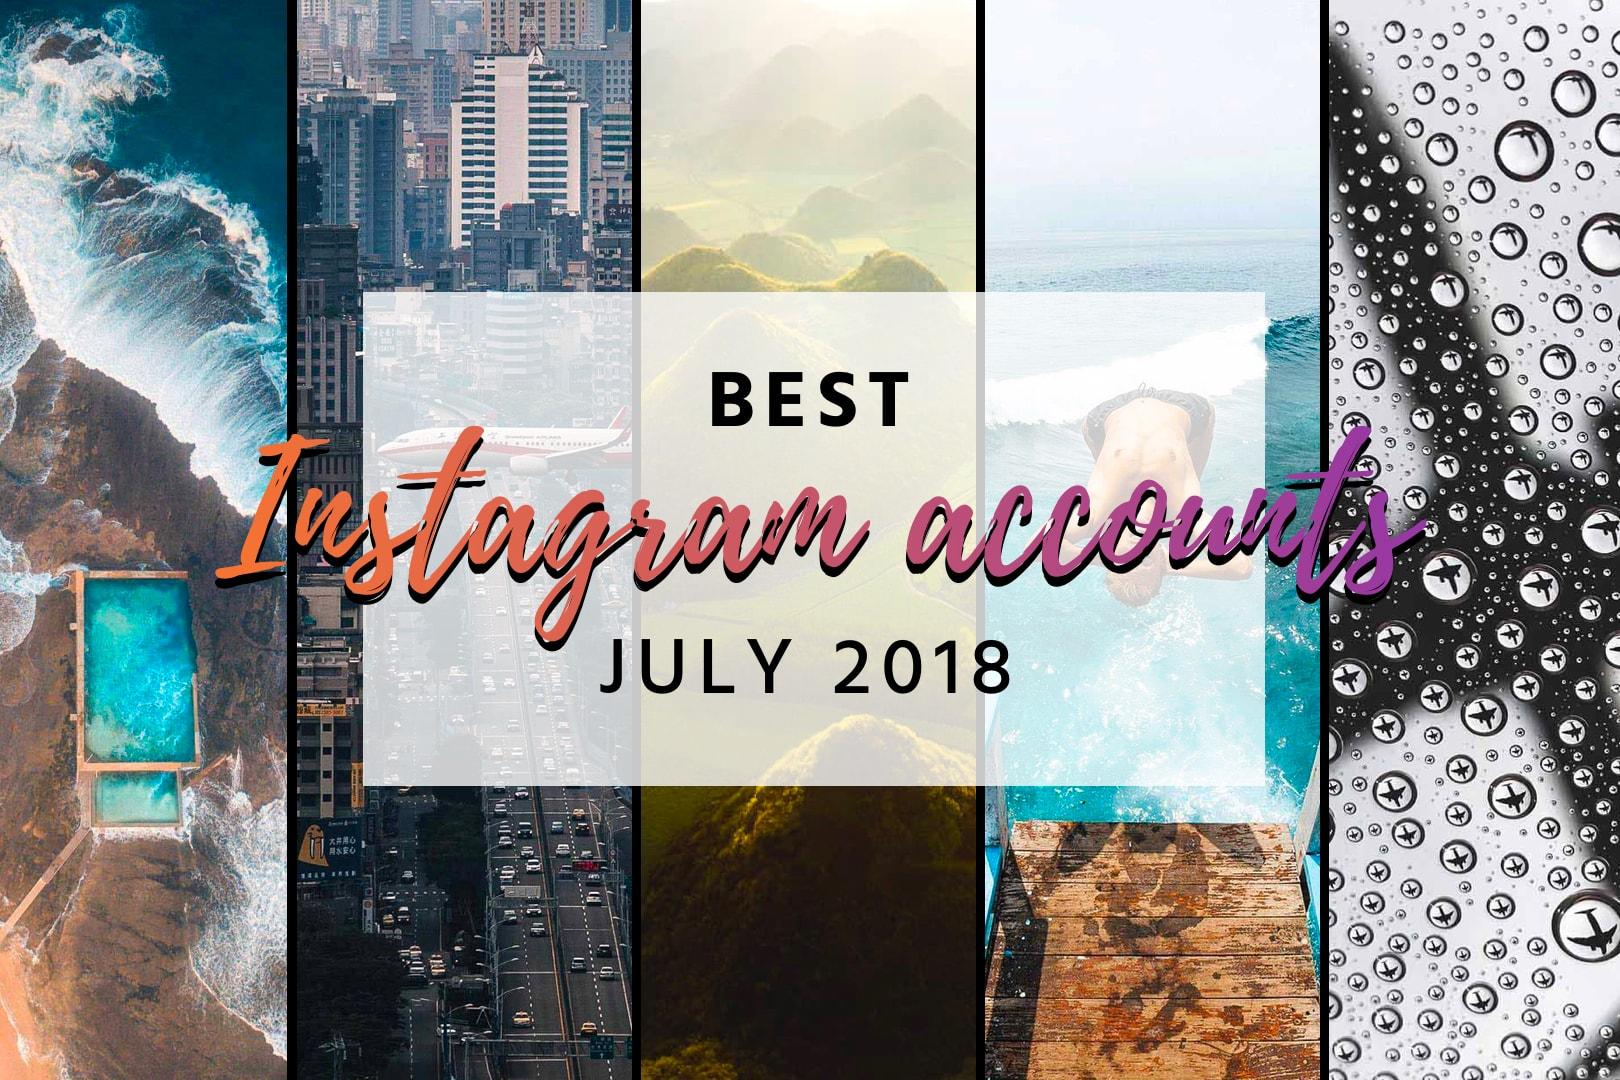 best macro counting instagram accounts